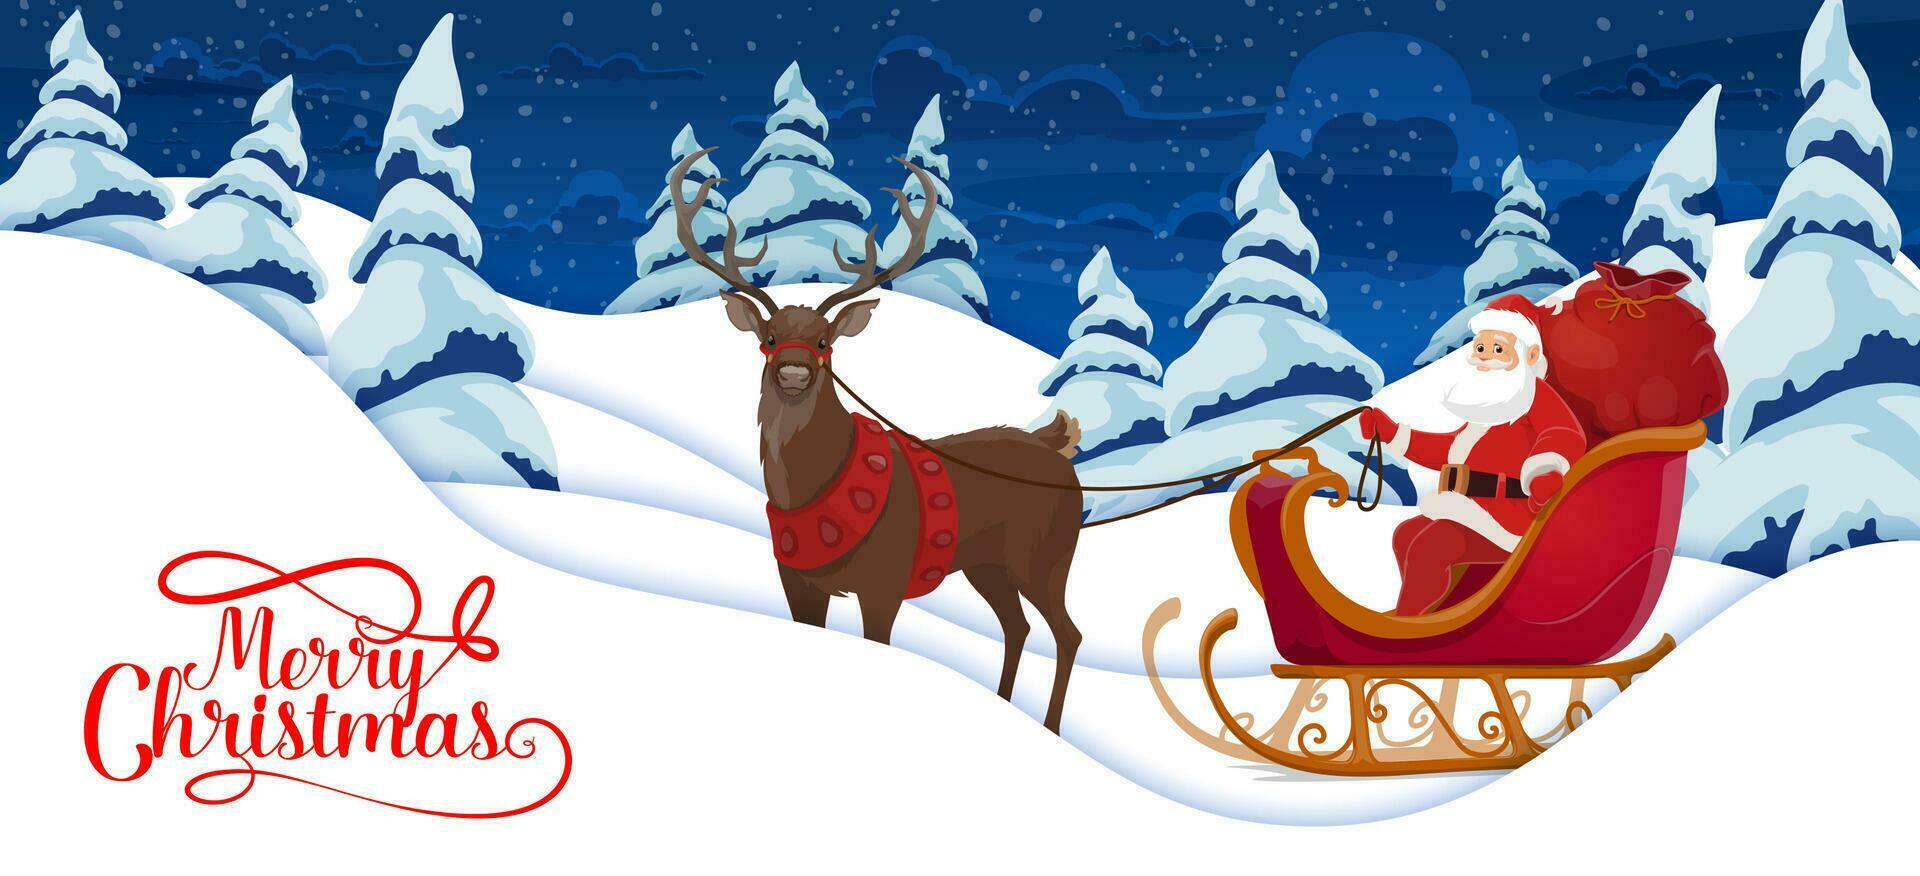 Christmas paper cut snow, Santa with reindeer vector